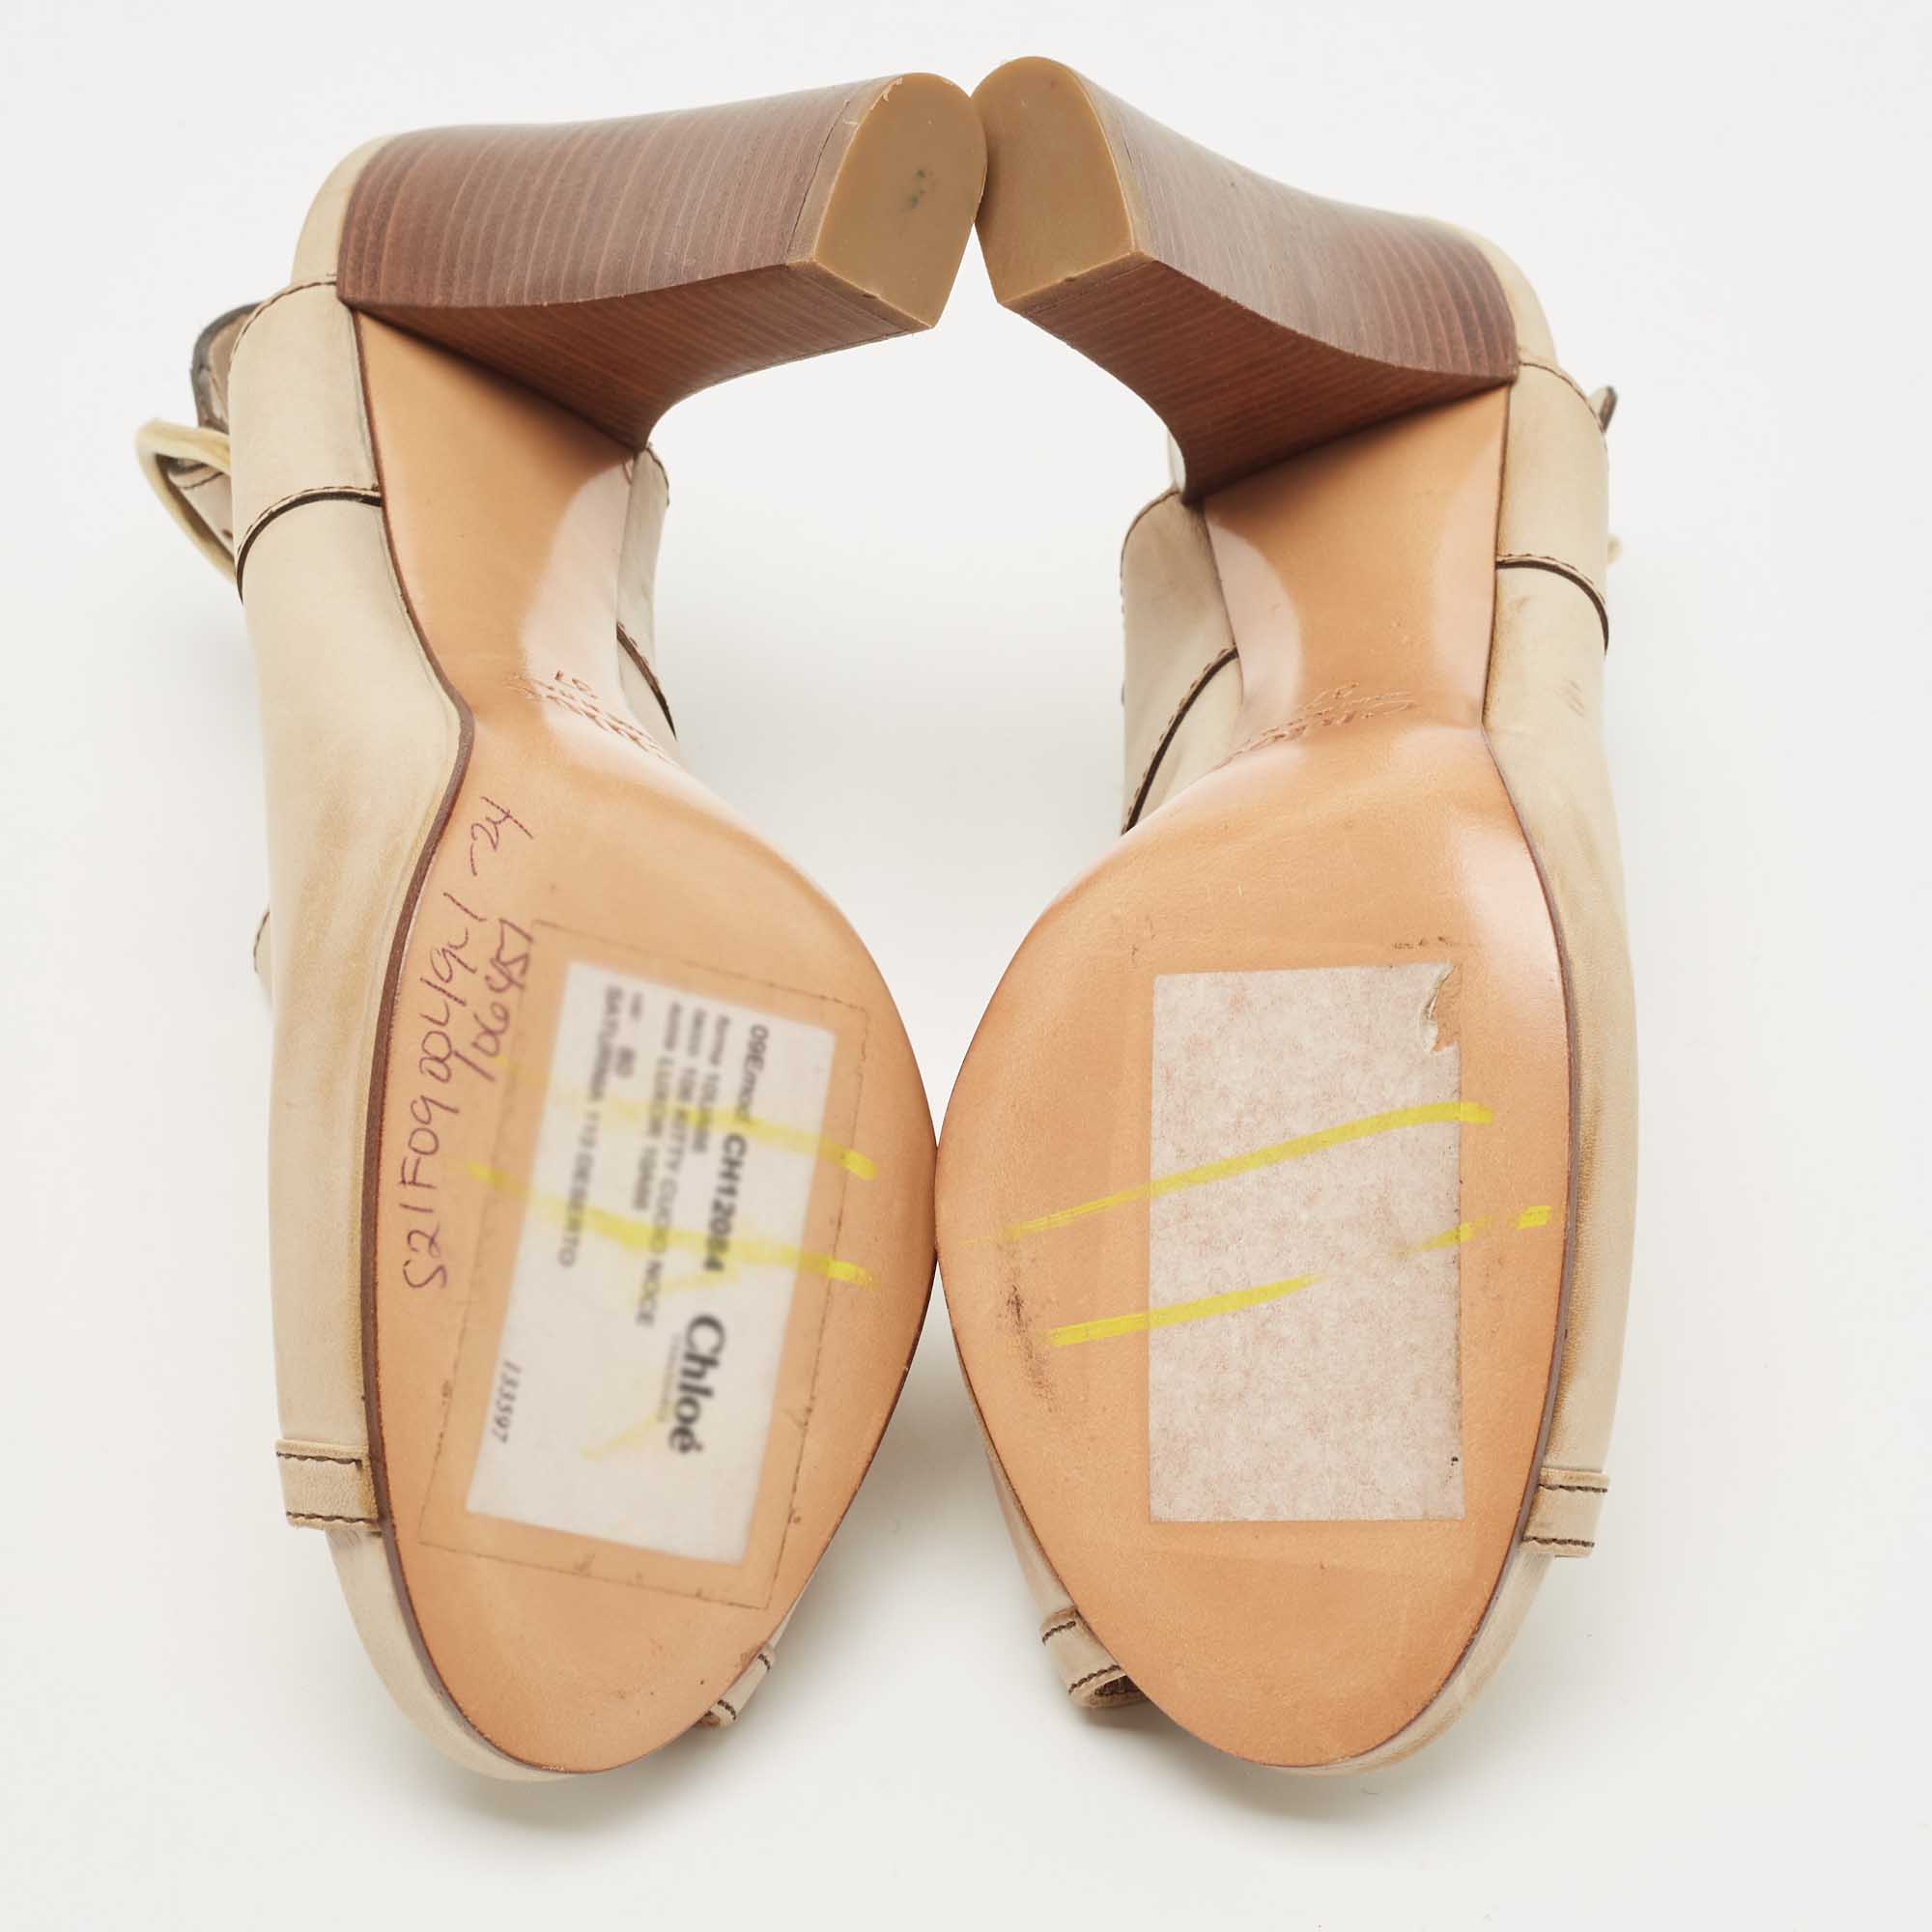 Chloe Beige Leather Peep Toe Slingback Sandals Size 37